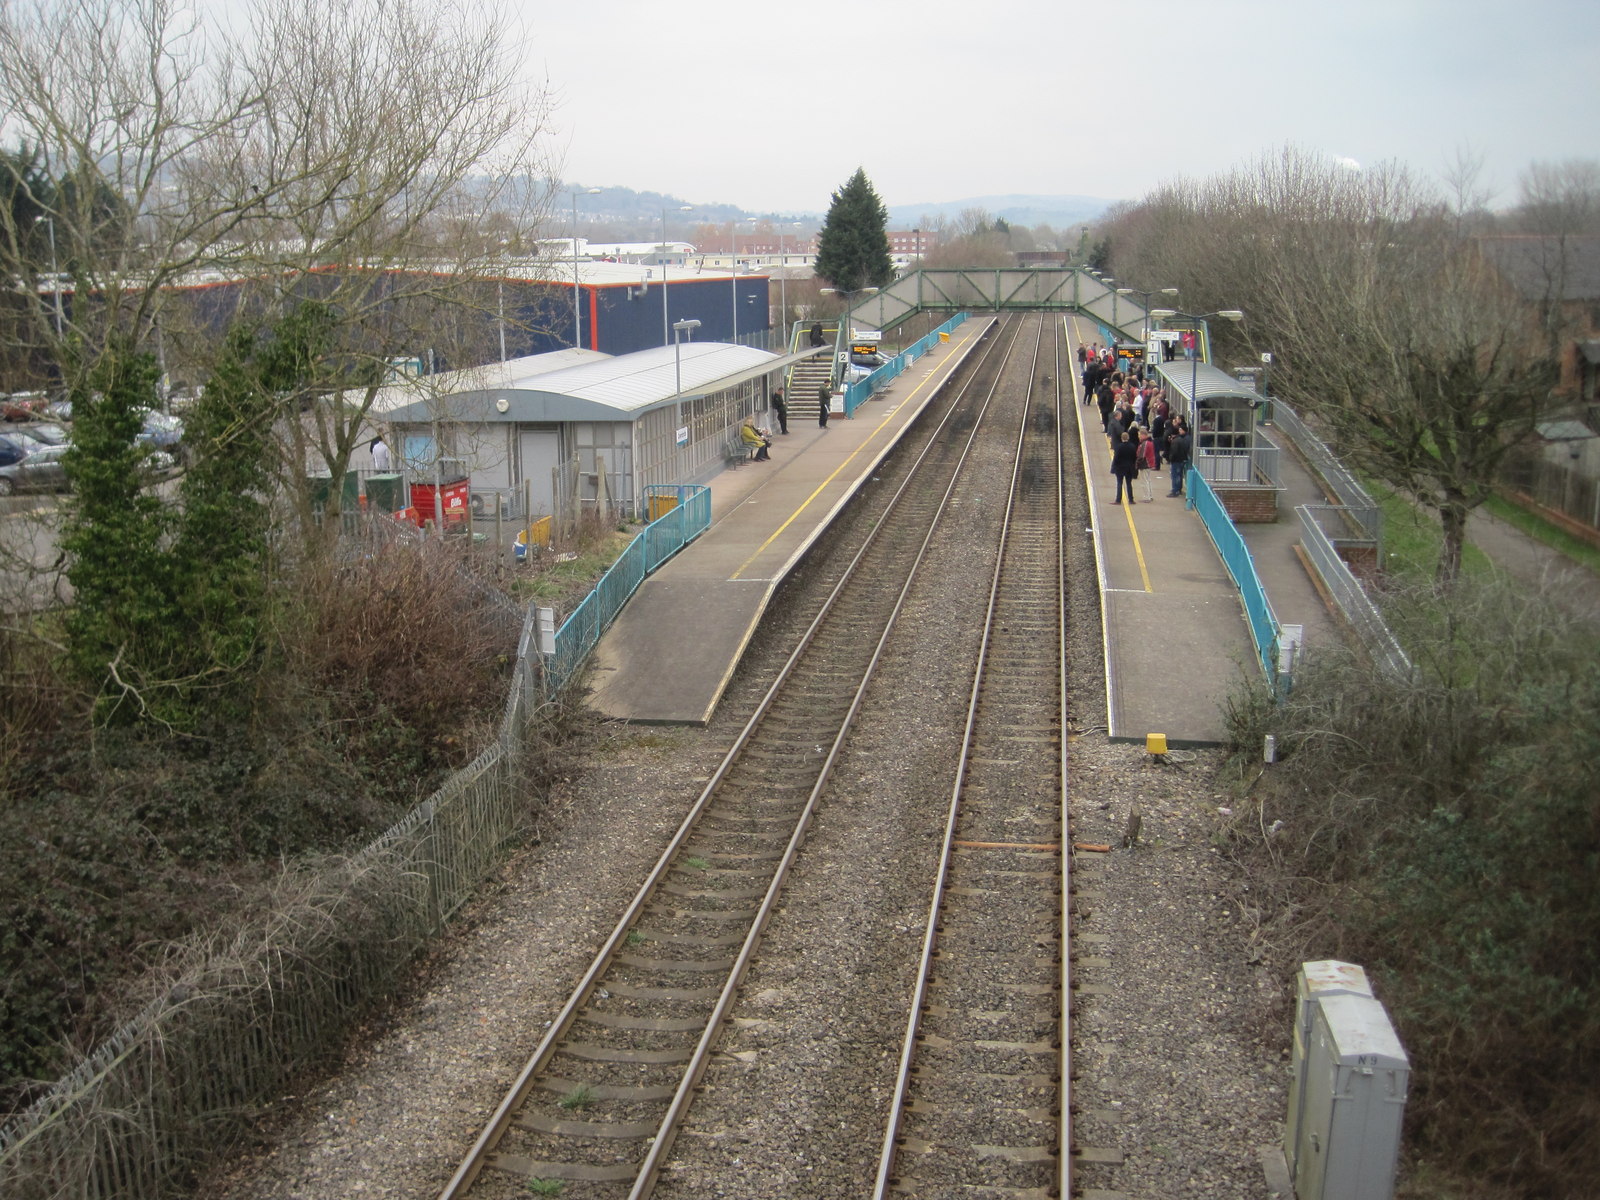 Cwmbran railway station